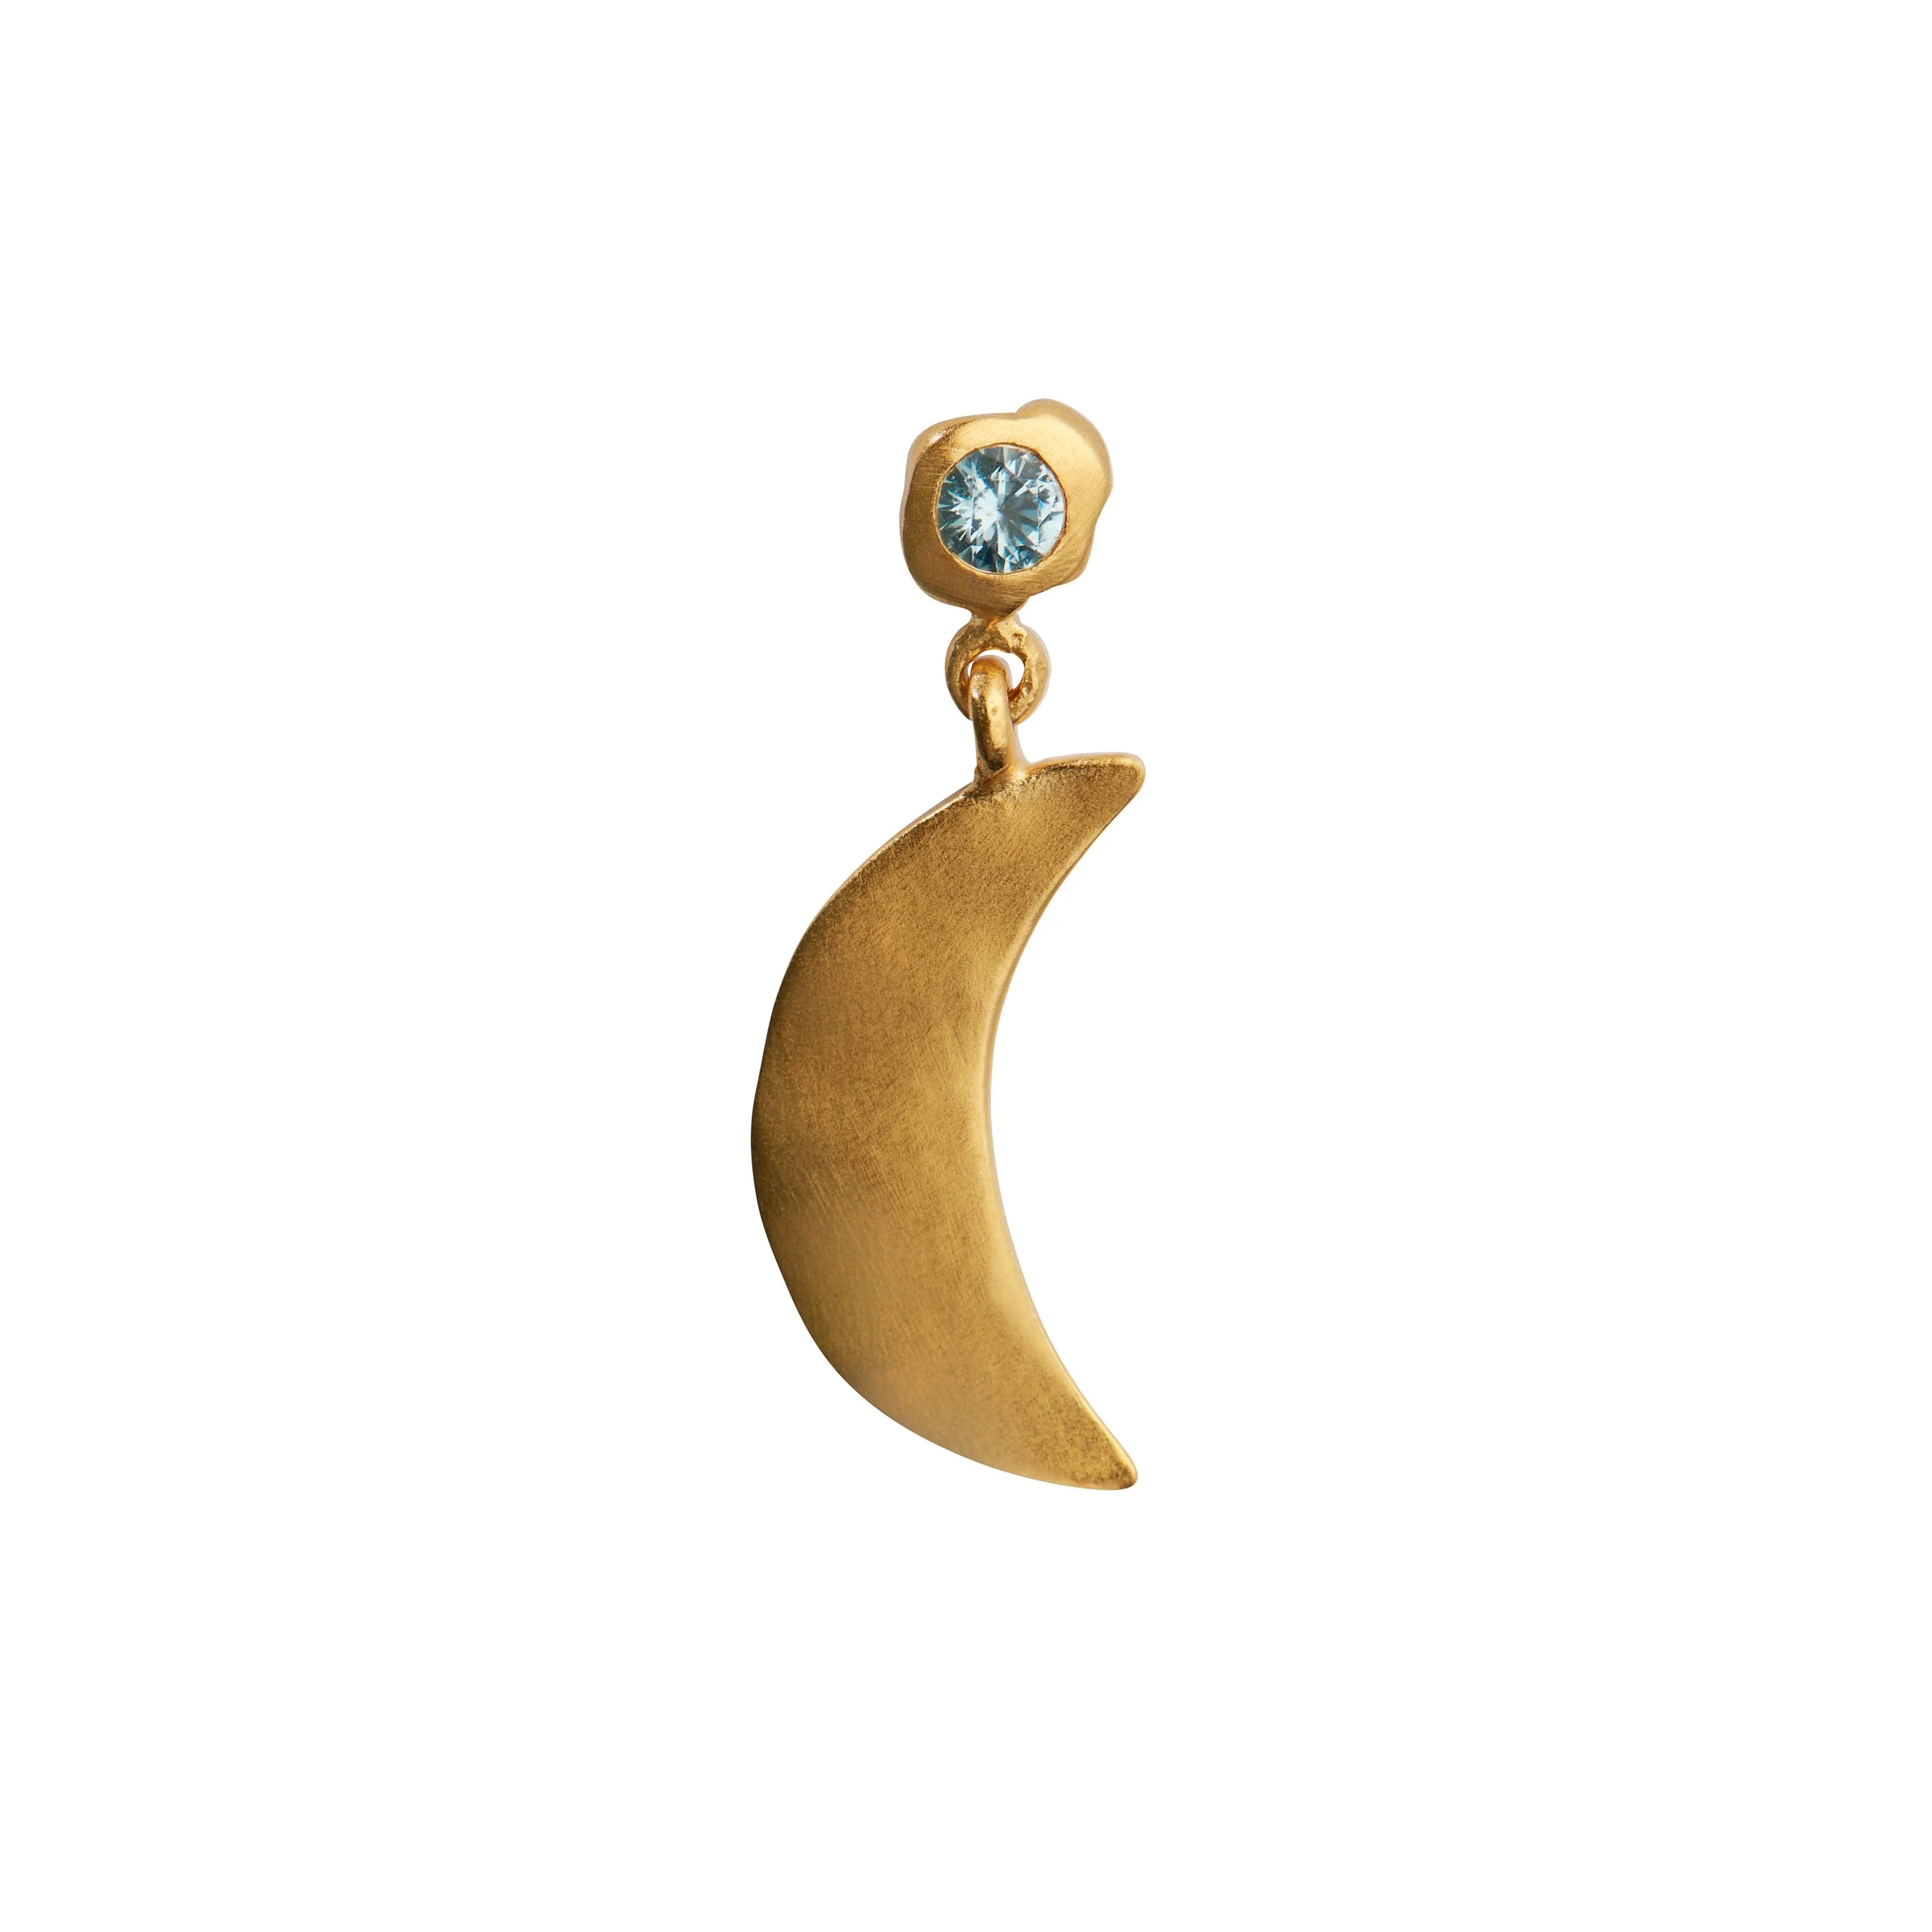 Big dot bella moon with blue lagune stone ørering - Forgyldt fra Stine A Jewelry